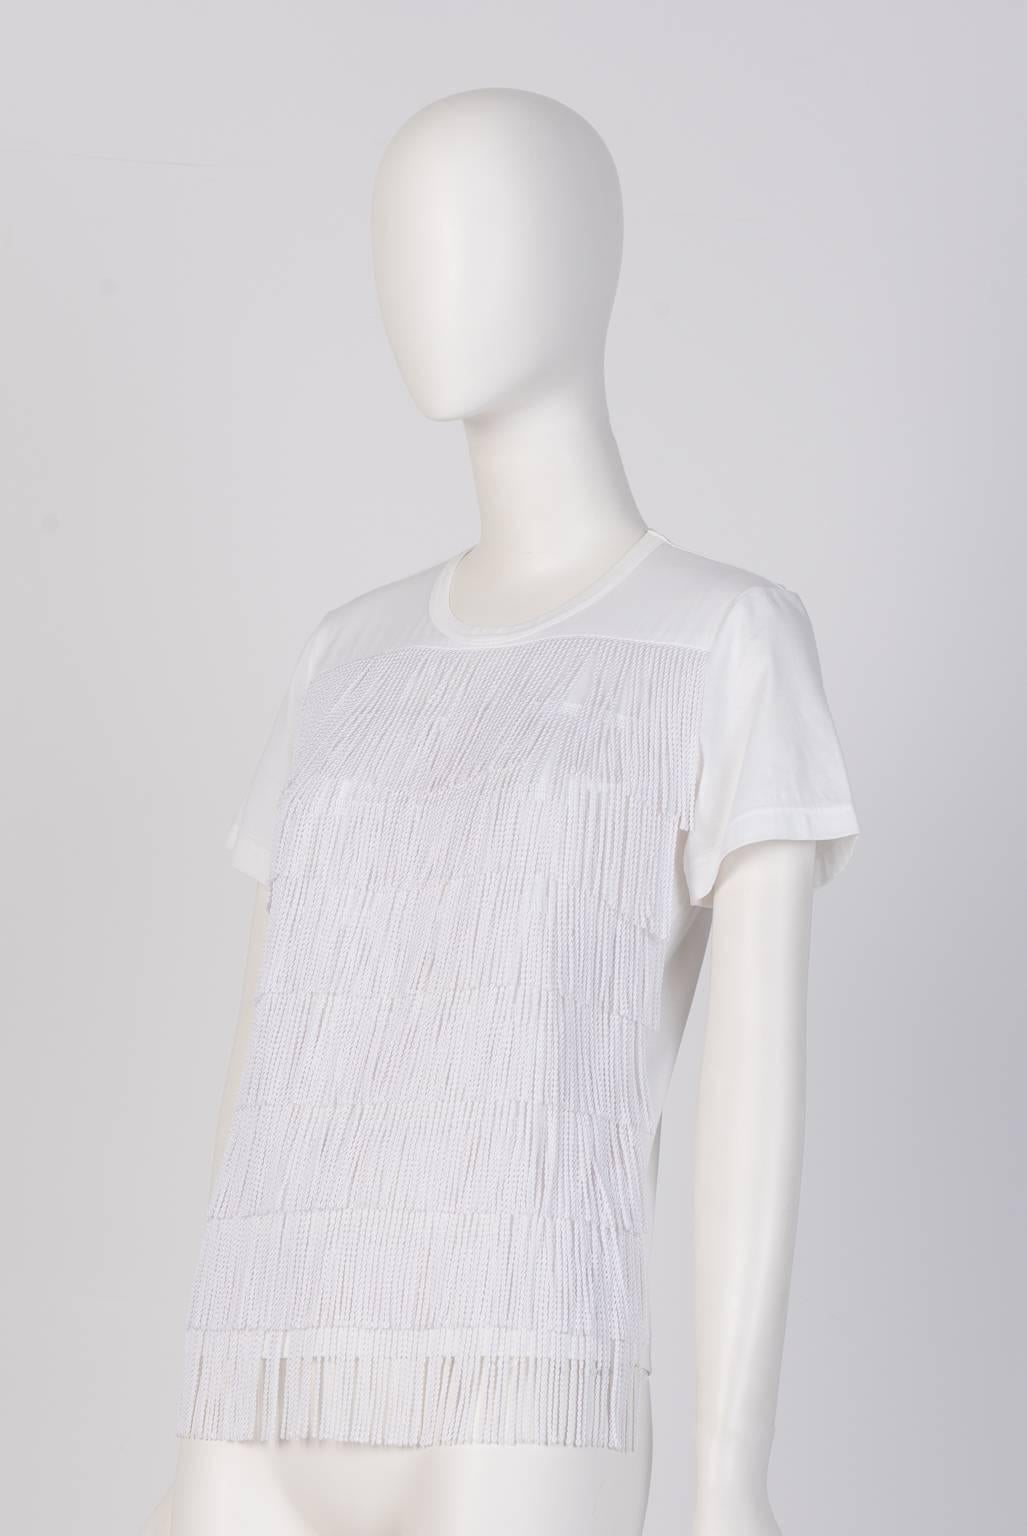 White, strigaht cut Junya Watanabe cotton T-shirt with an exquisite tassel front panel. 